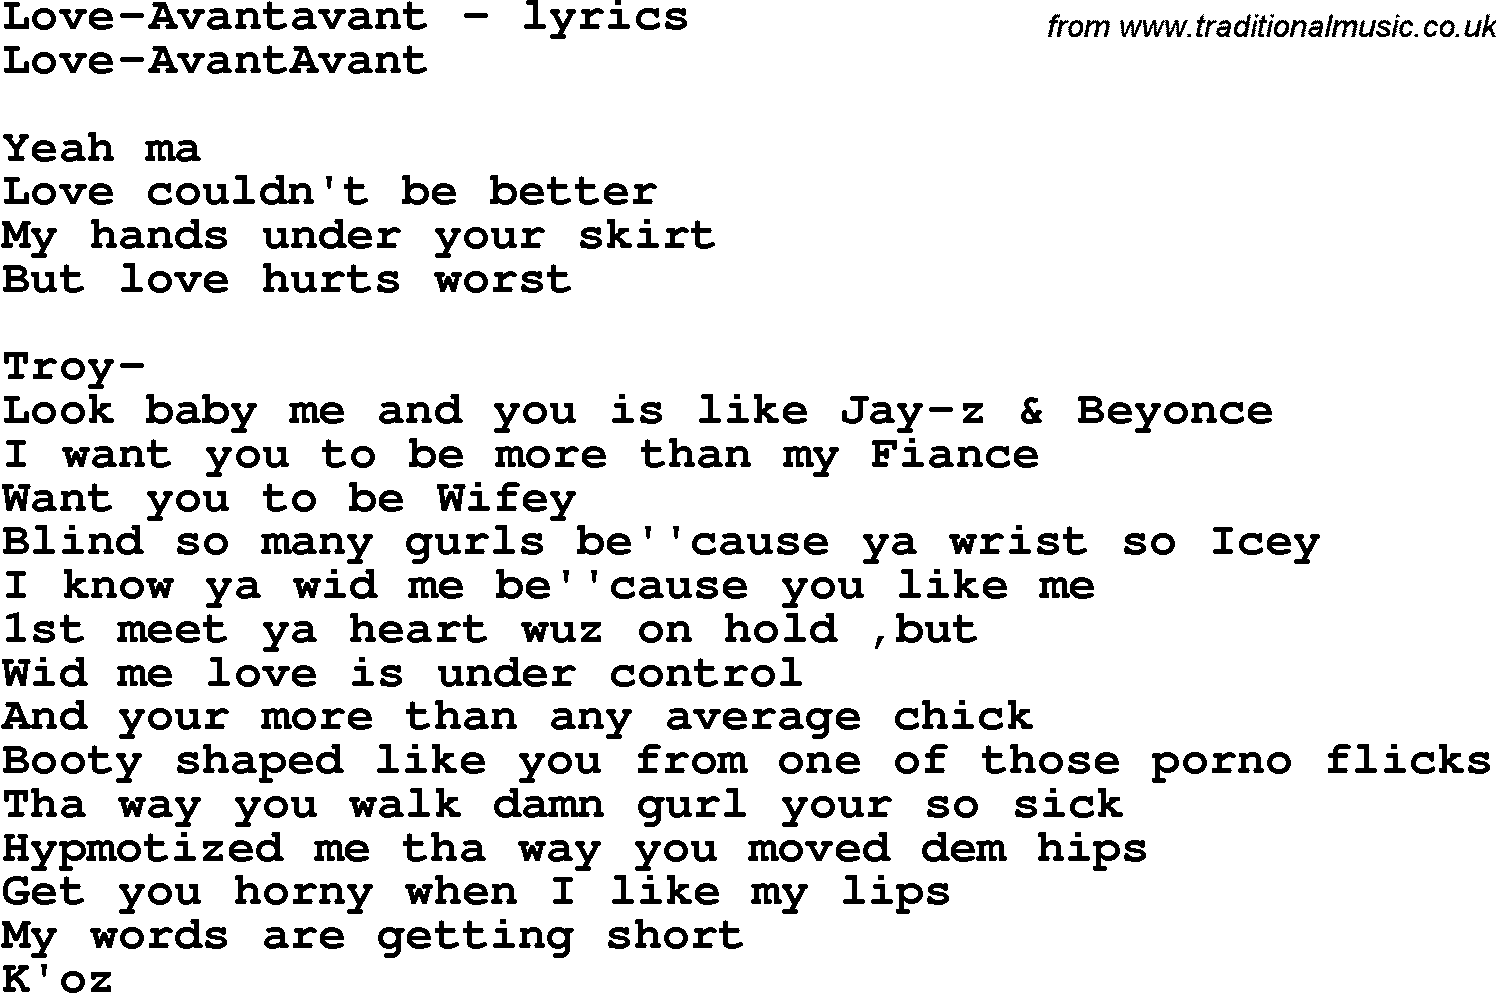 Love Song Lyrics for: Love-Avantavant